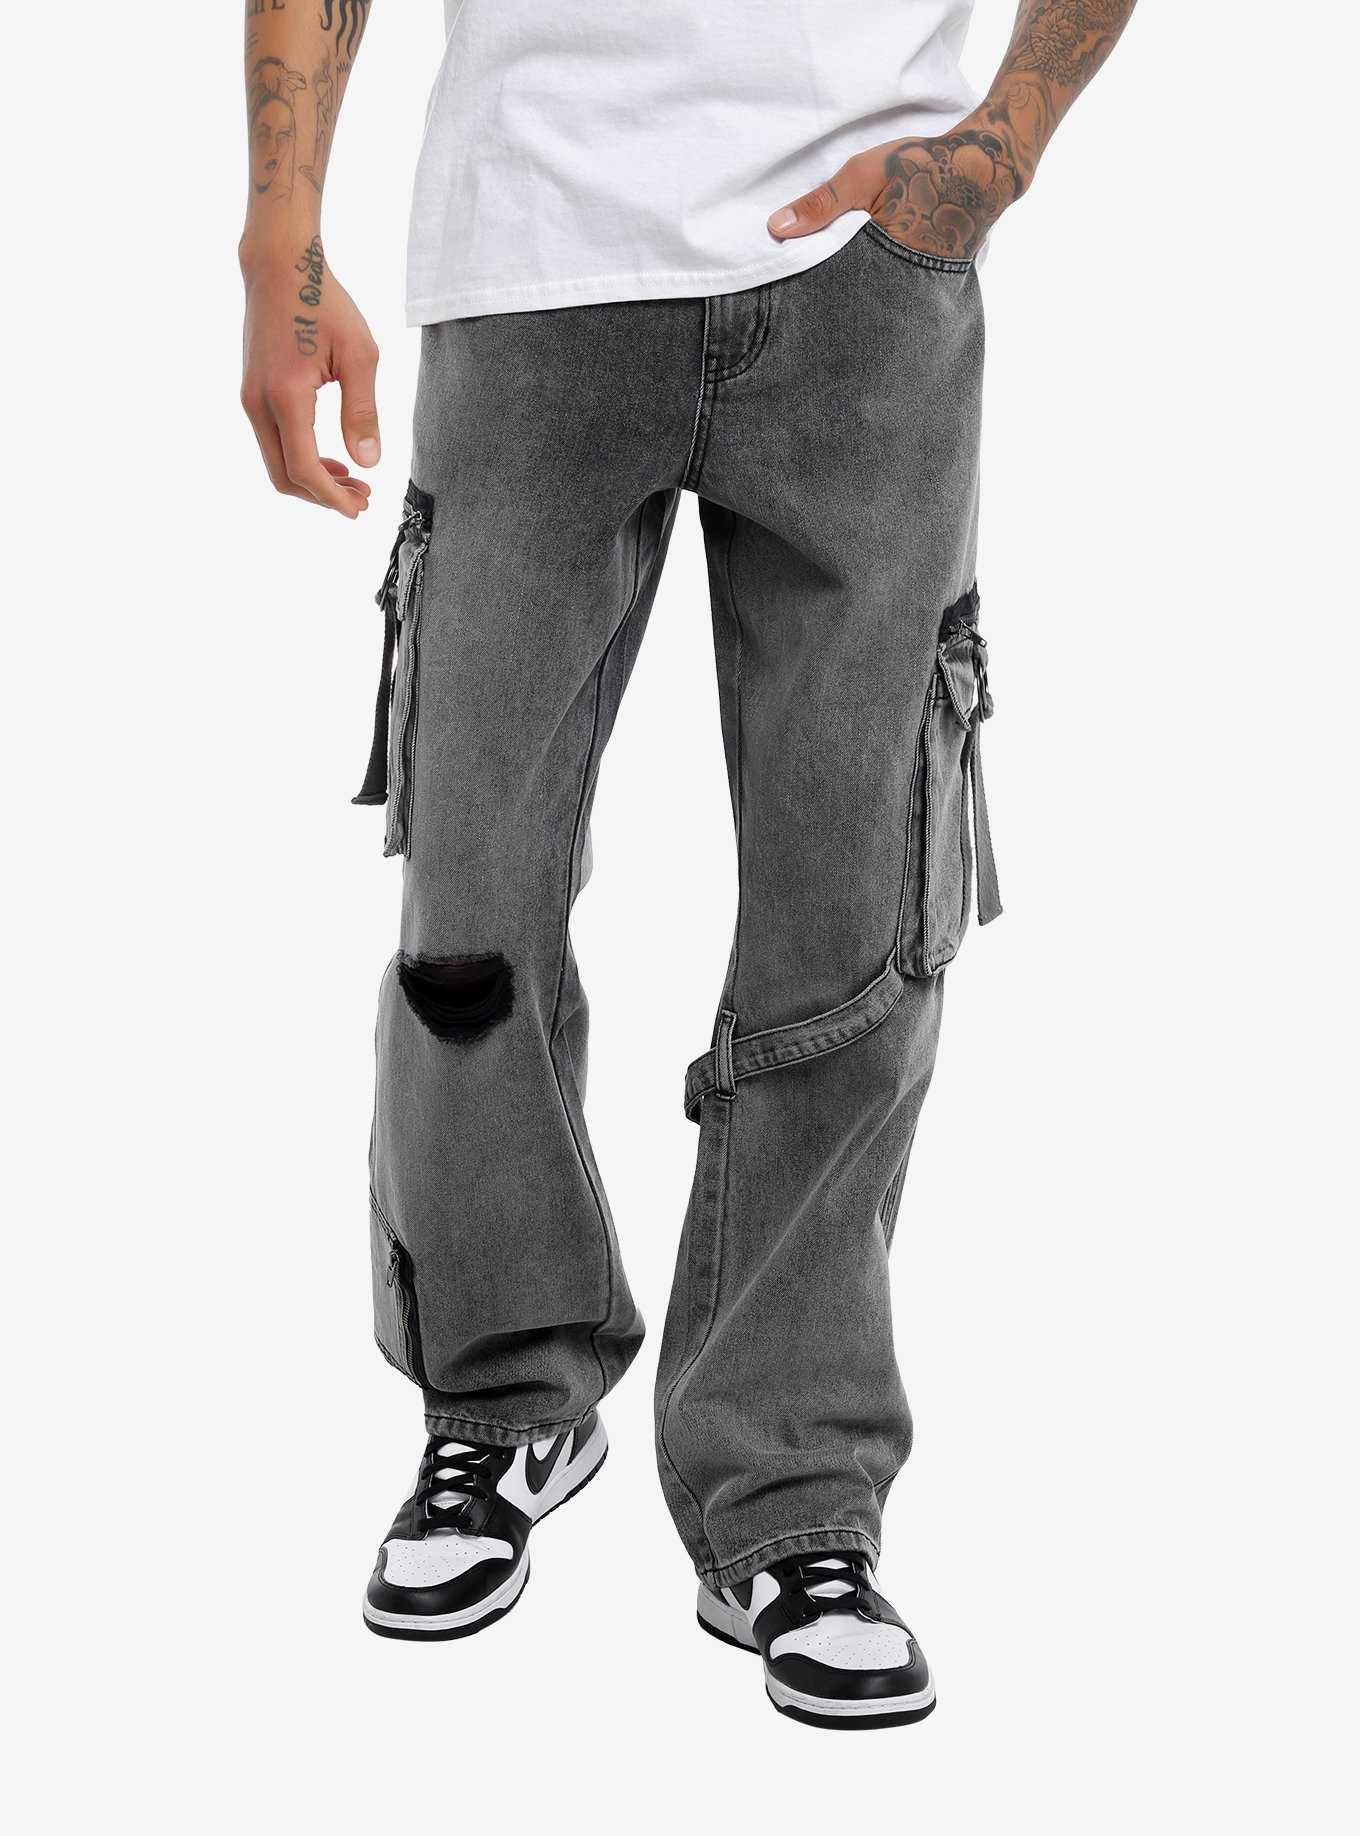 Hot Topic Grey Plaid Pants Size 2X